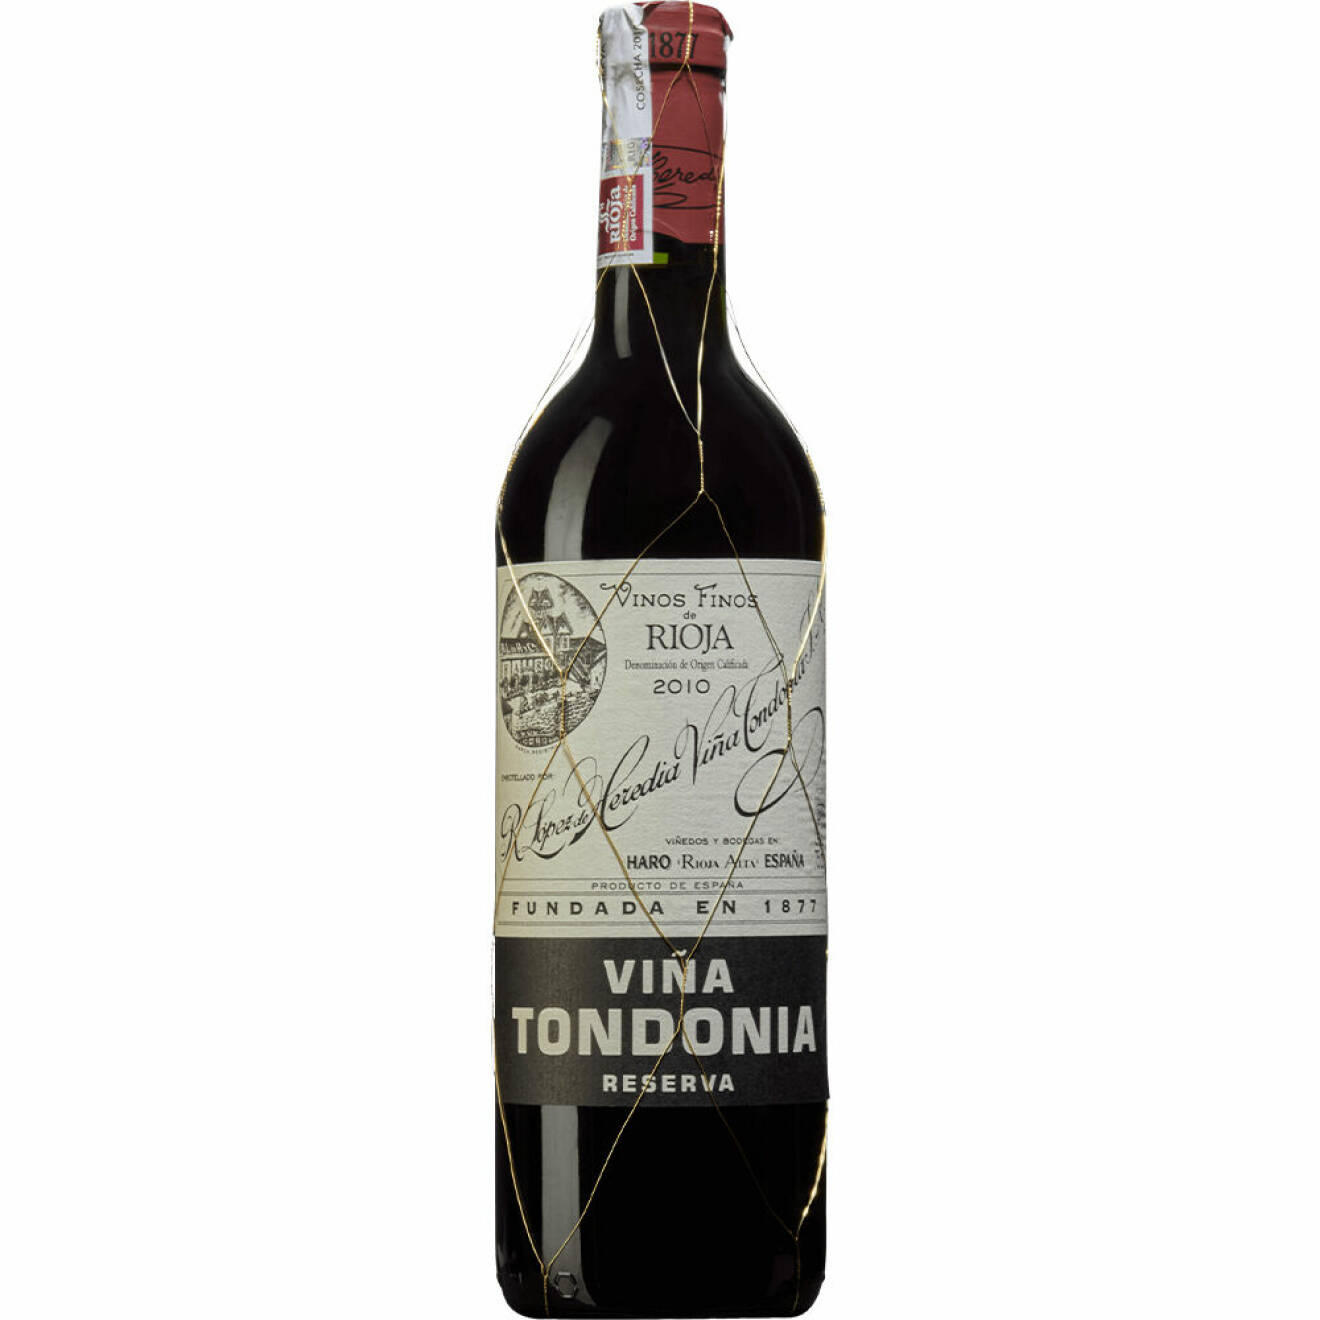 Viña Tondonia Reserva 2010, Spanien, Rioja (92688) 371 kr, TS.